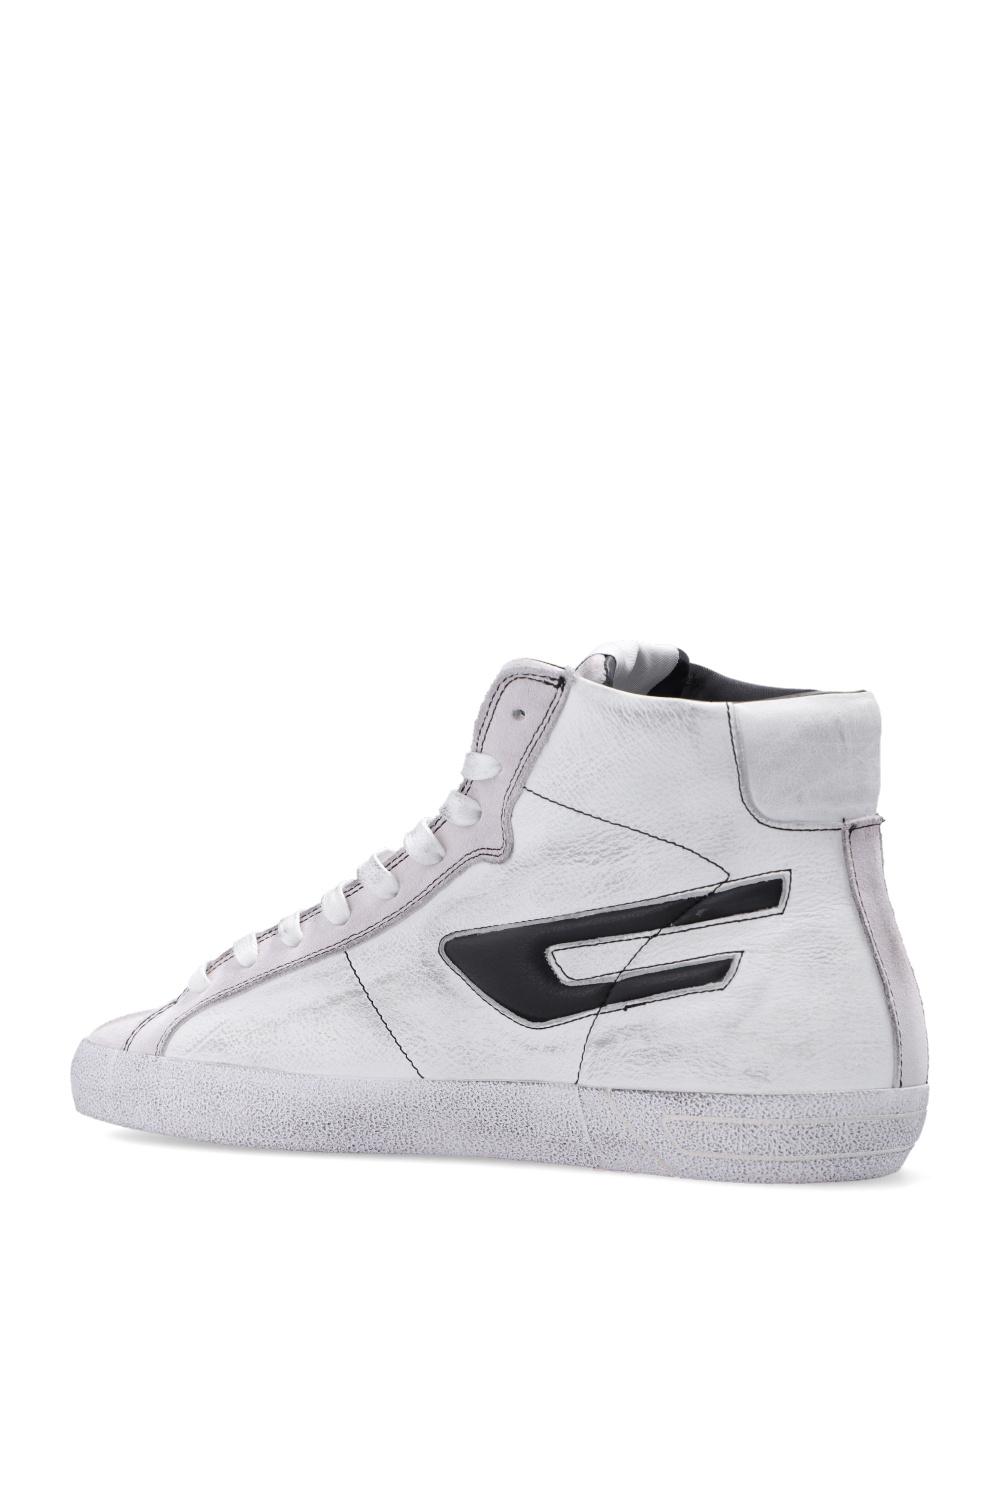 DIESEL Leather 's-leroji Mid' Sneakers in White for Men | Lyst